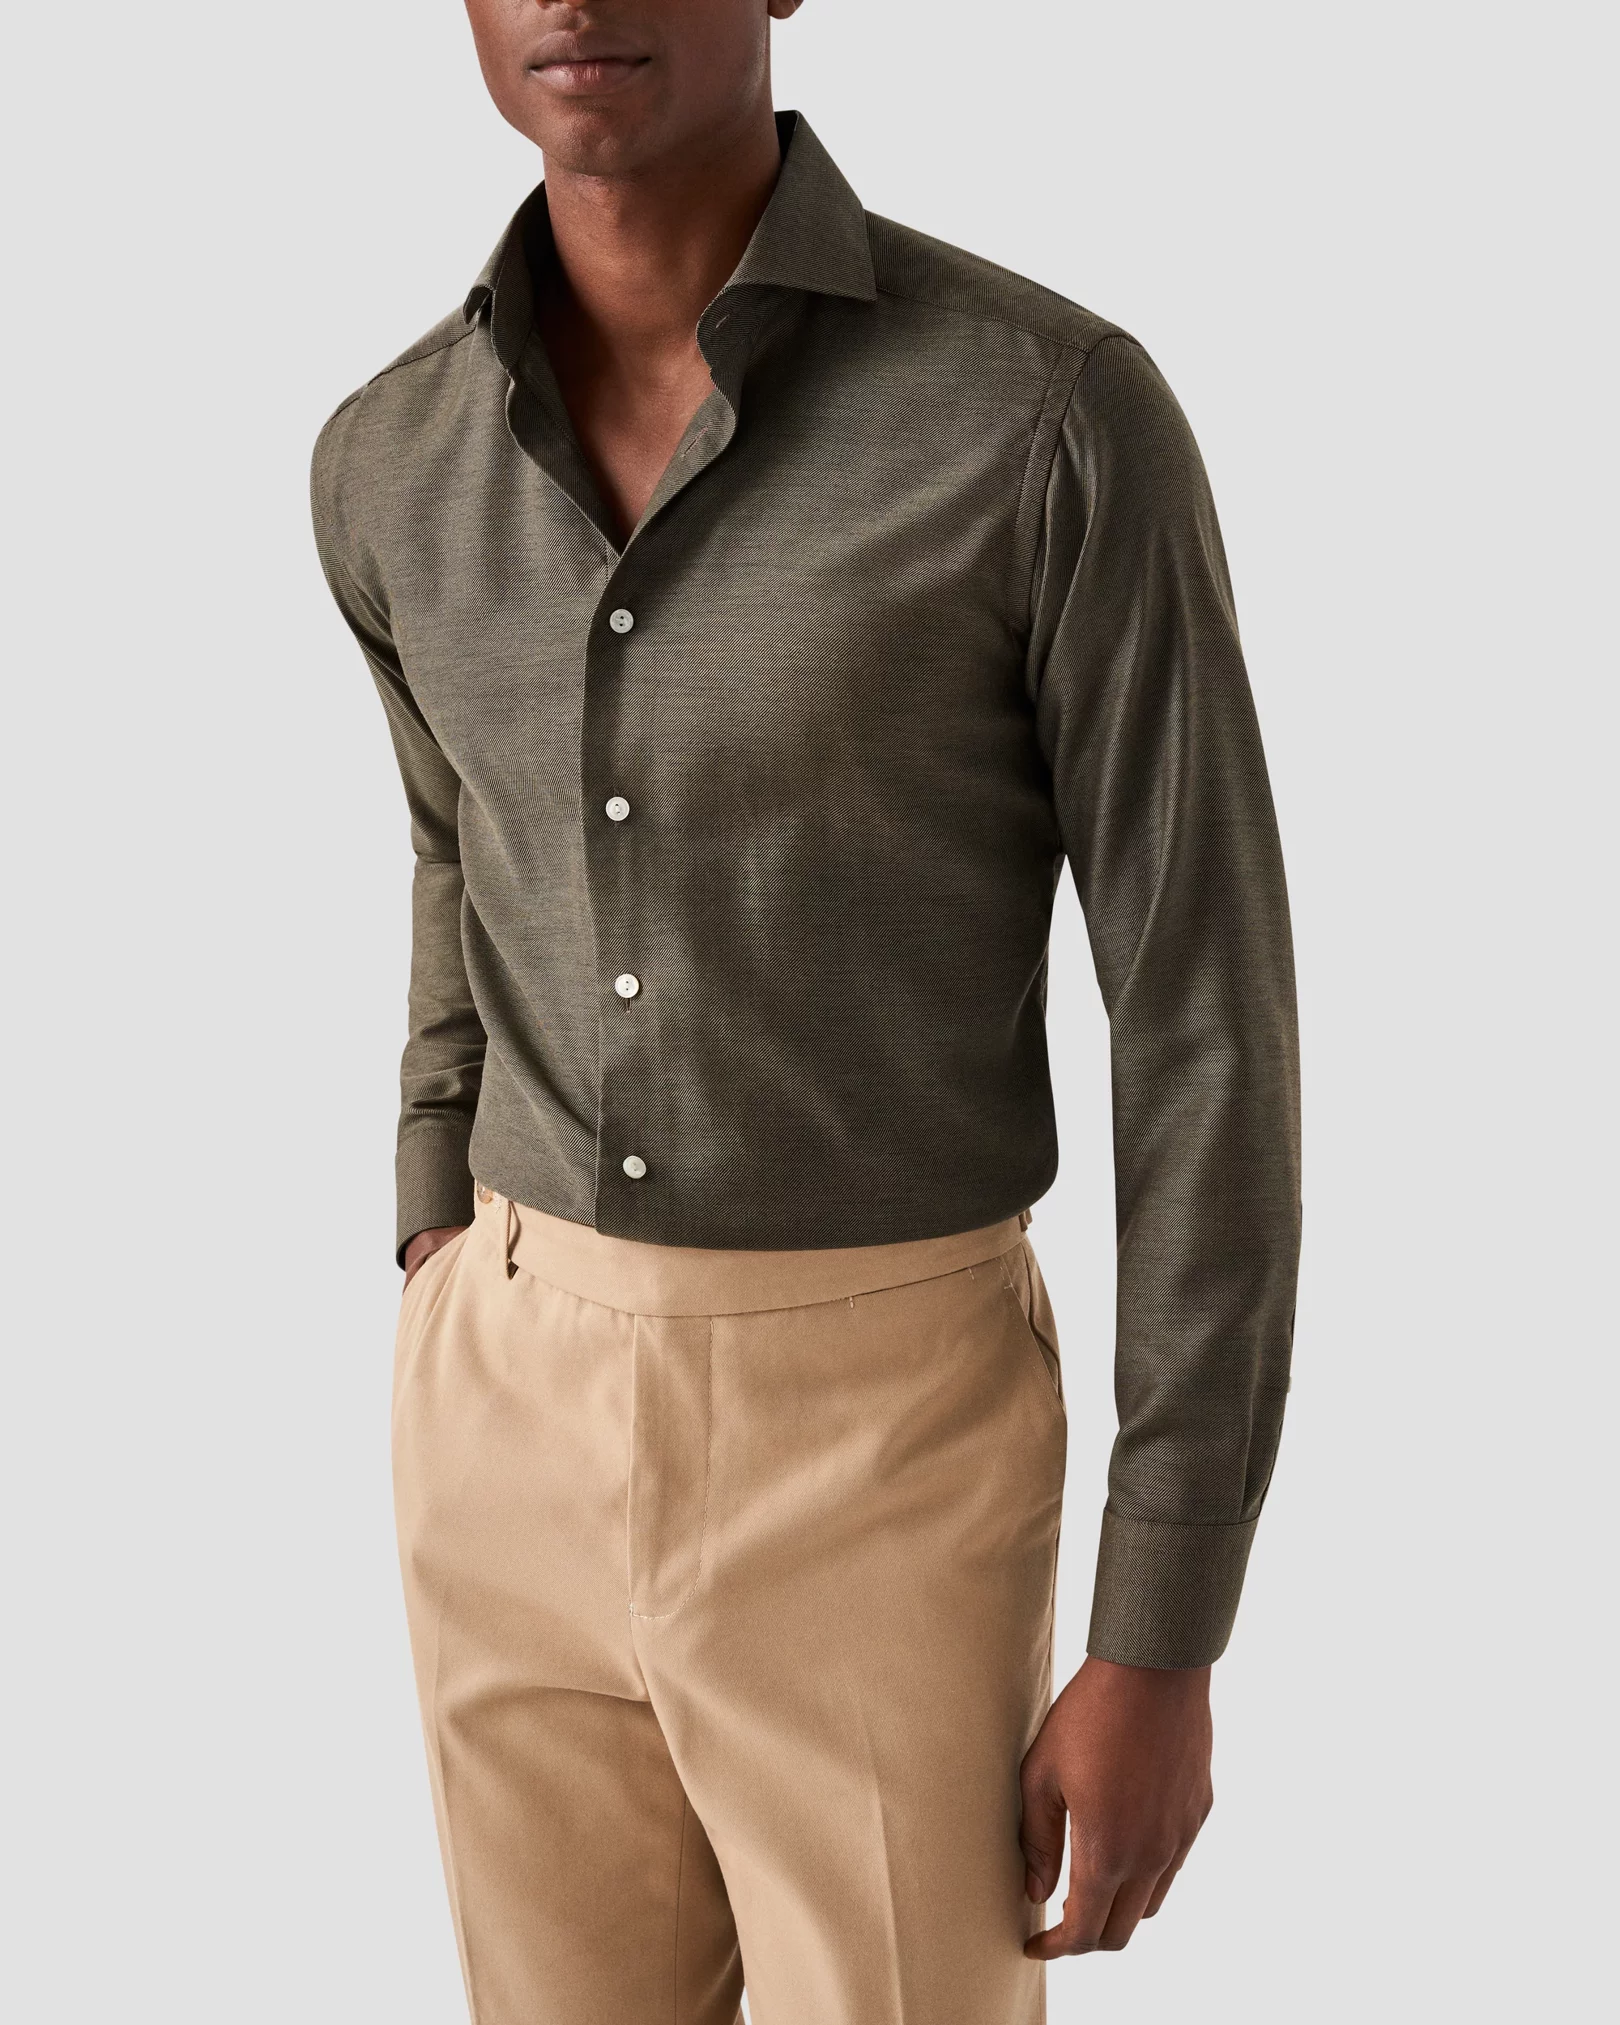 Eton - solid dark brown merino shirt